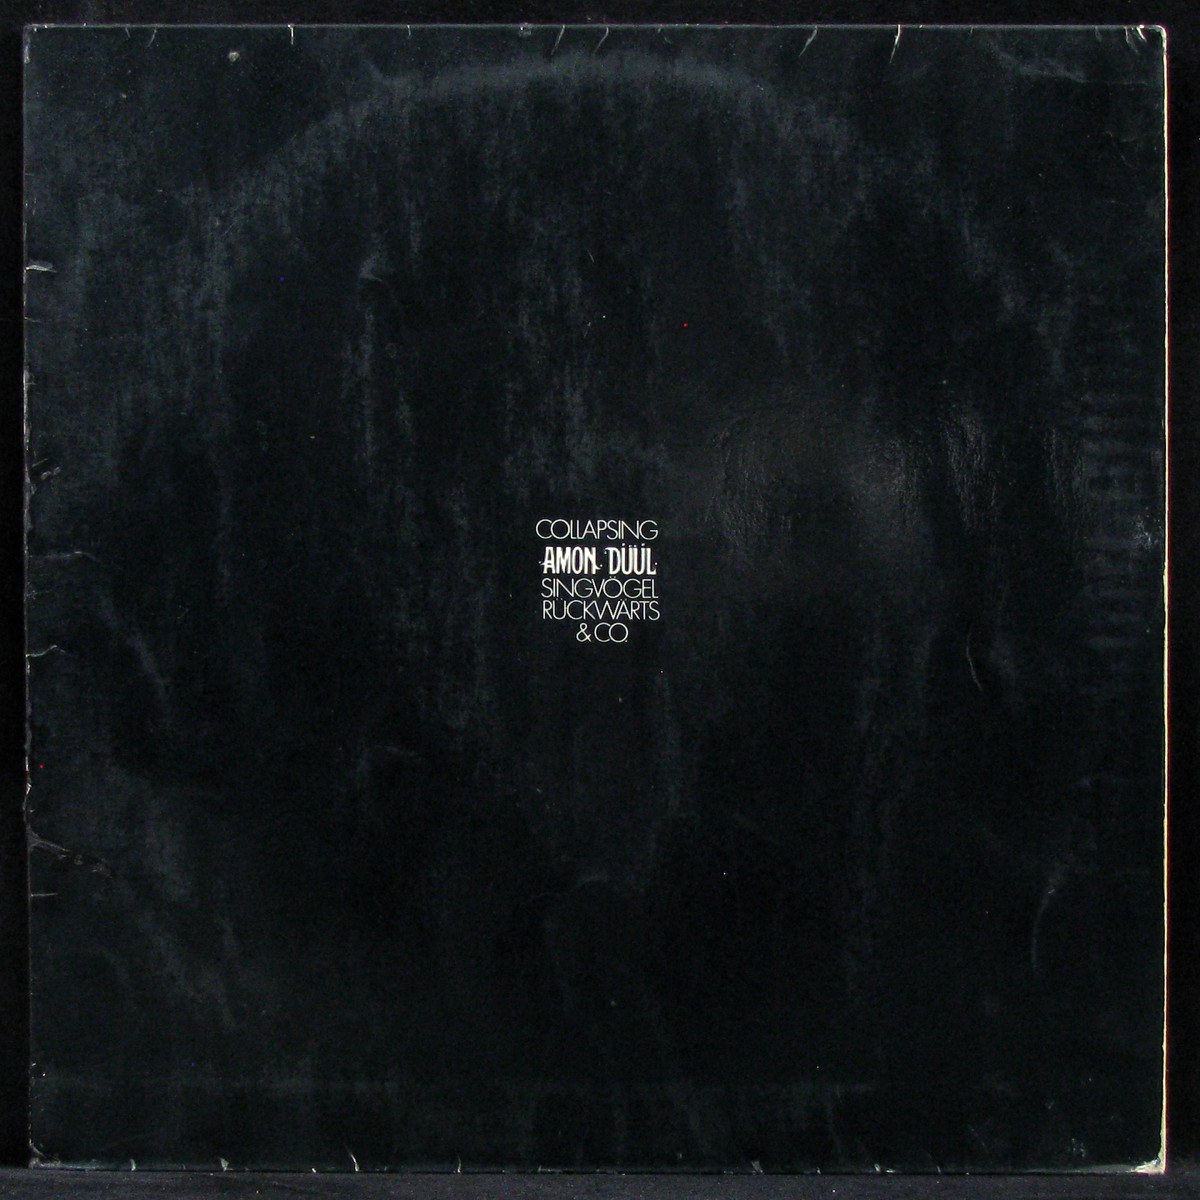 LP Amon Duul — Collapsing фото